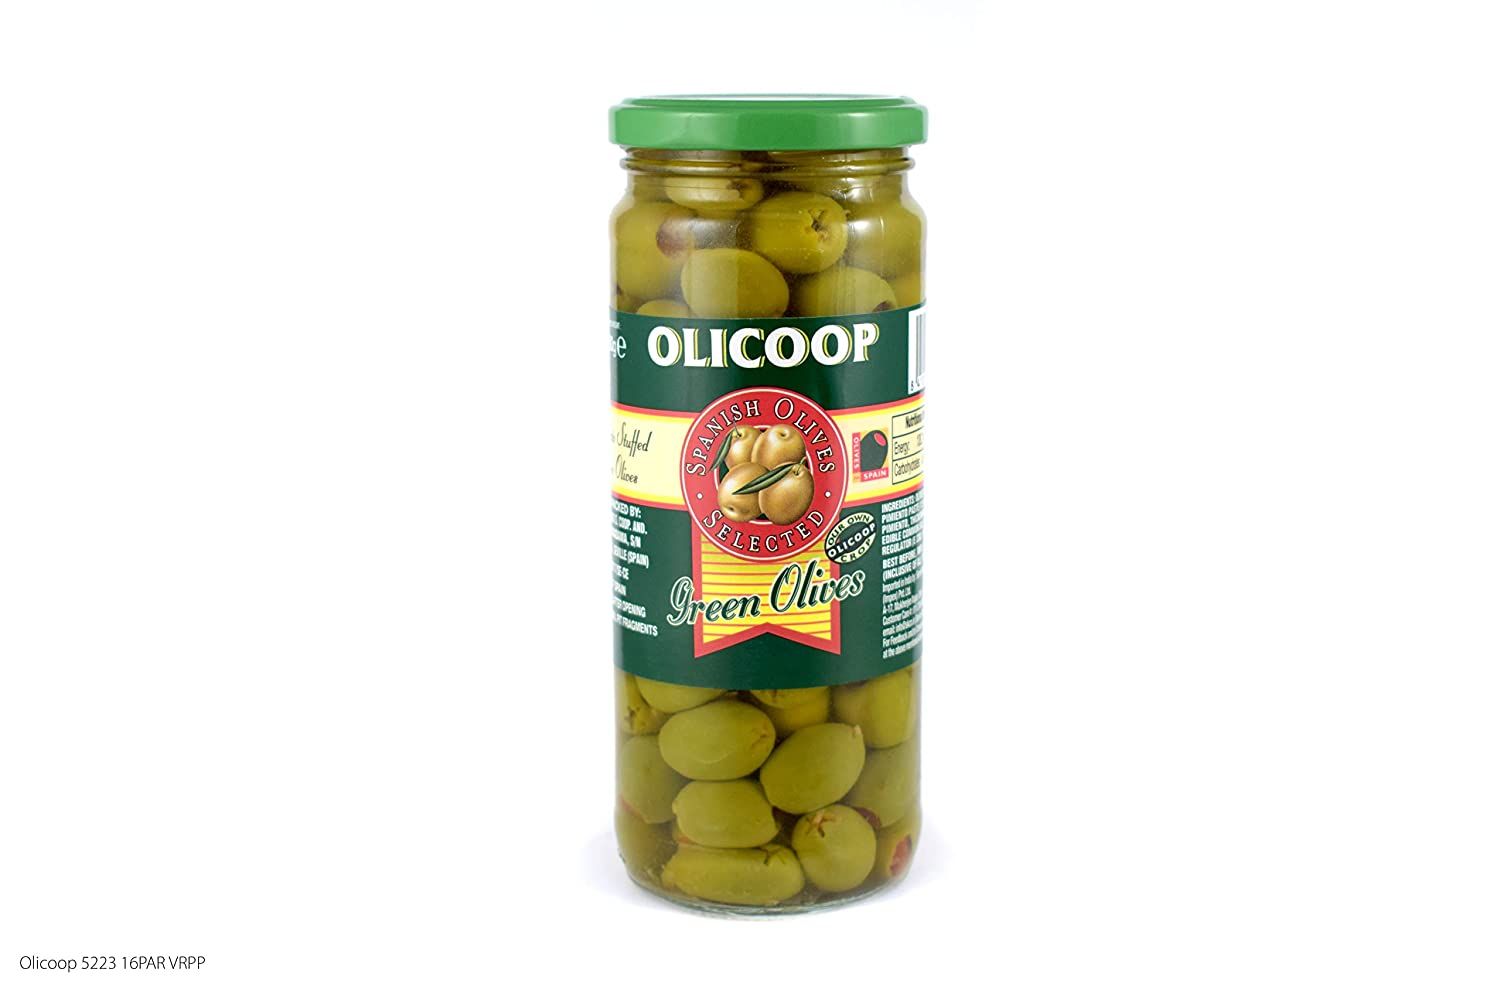 Olicoop Green Stuffed Olives Image